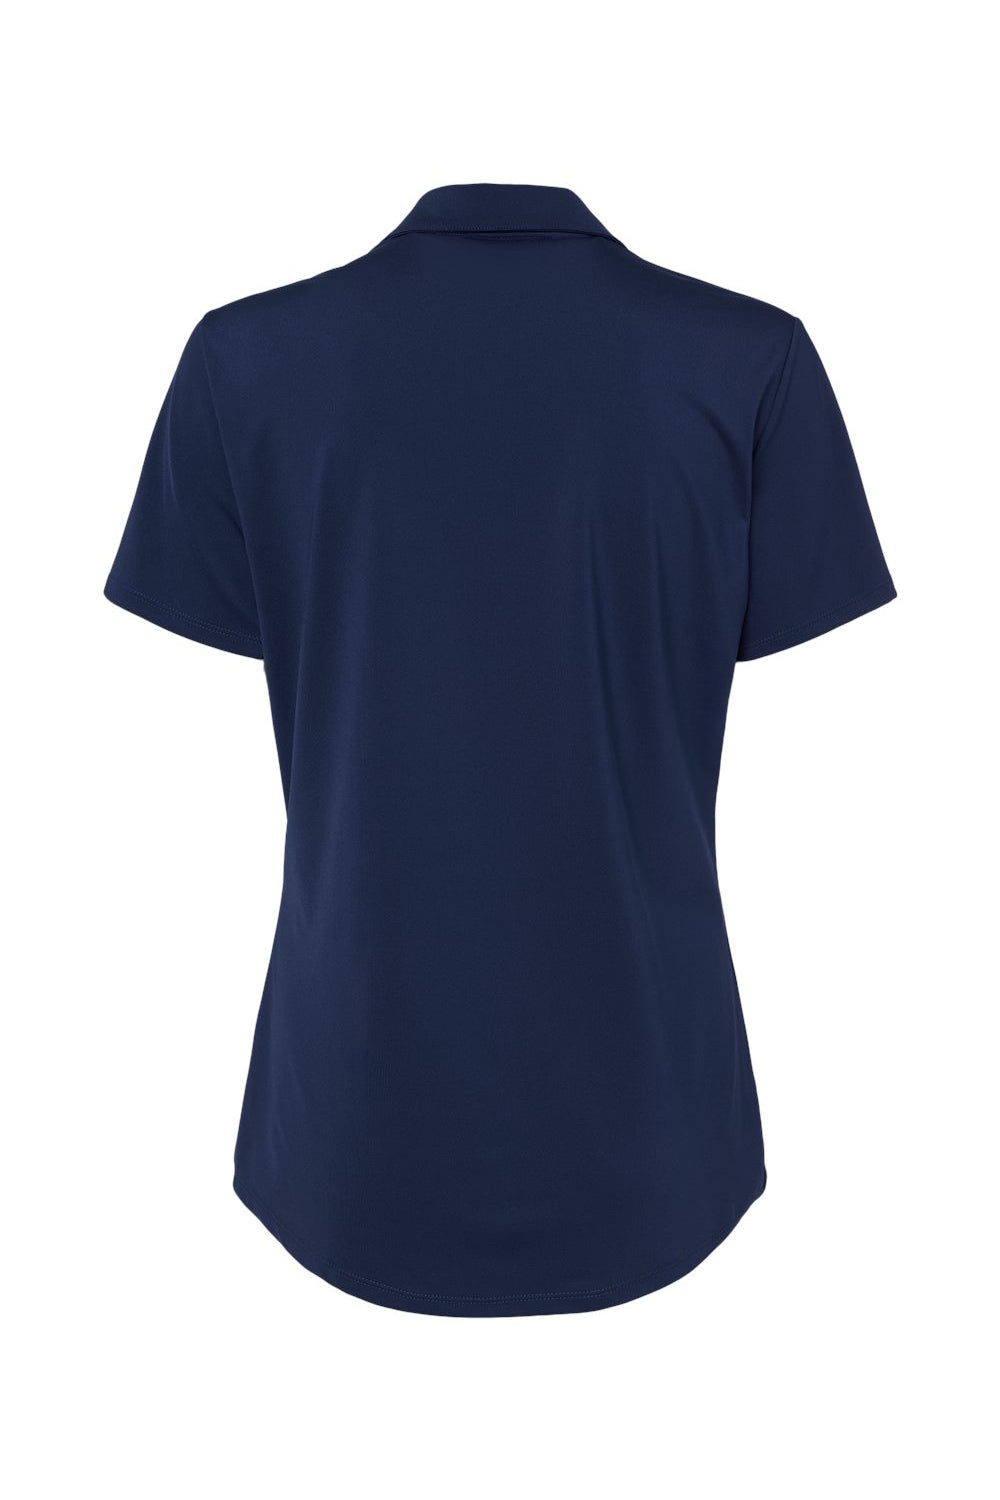 Adidas A515 Womens Ultimate Short Sleeve Polo Shirt Team Navy Blue Flat Back